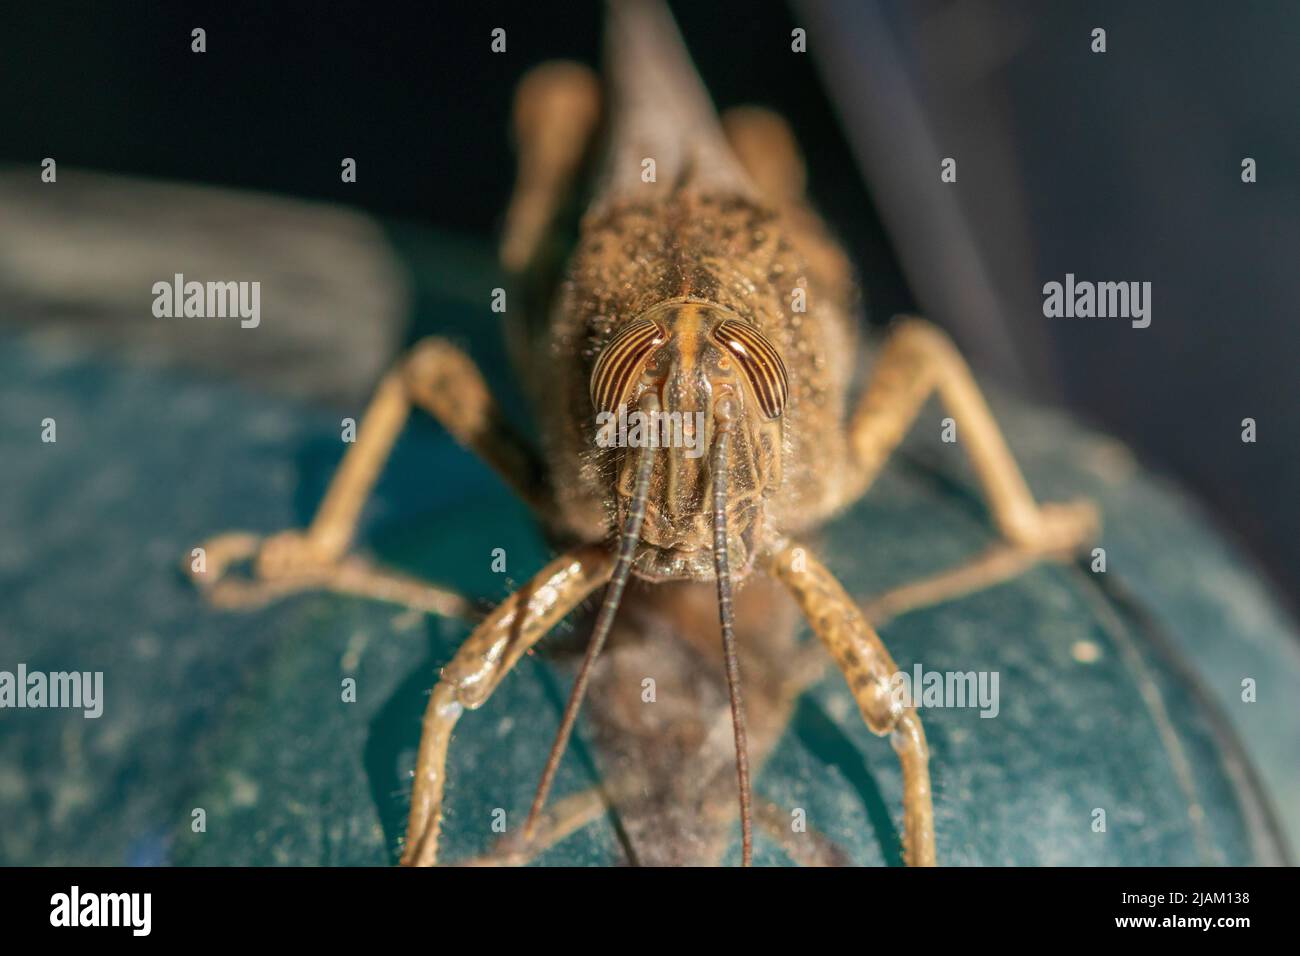 Anacridium aegyptium, Close Up of the Egyptian locust Stock Photo